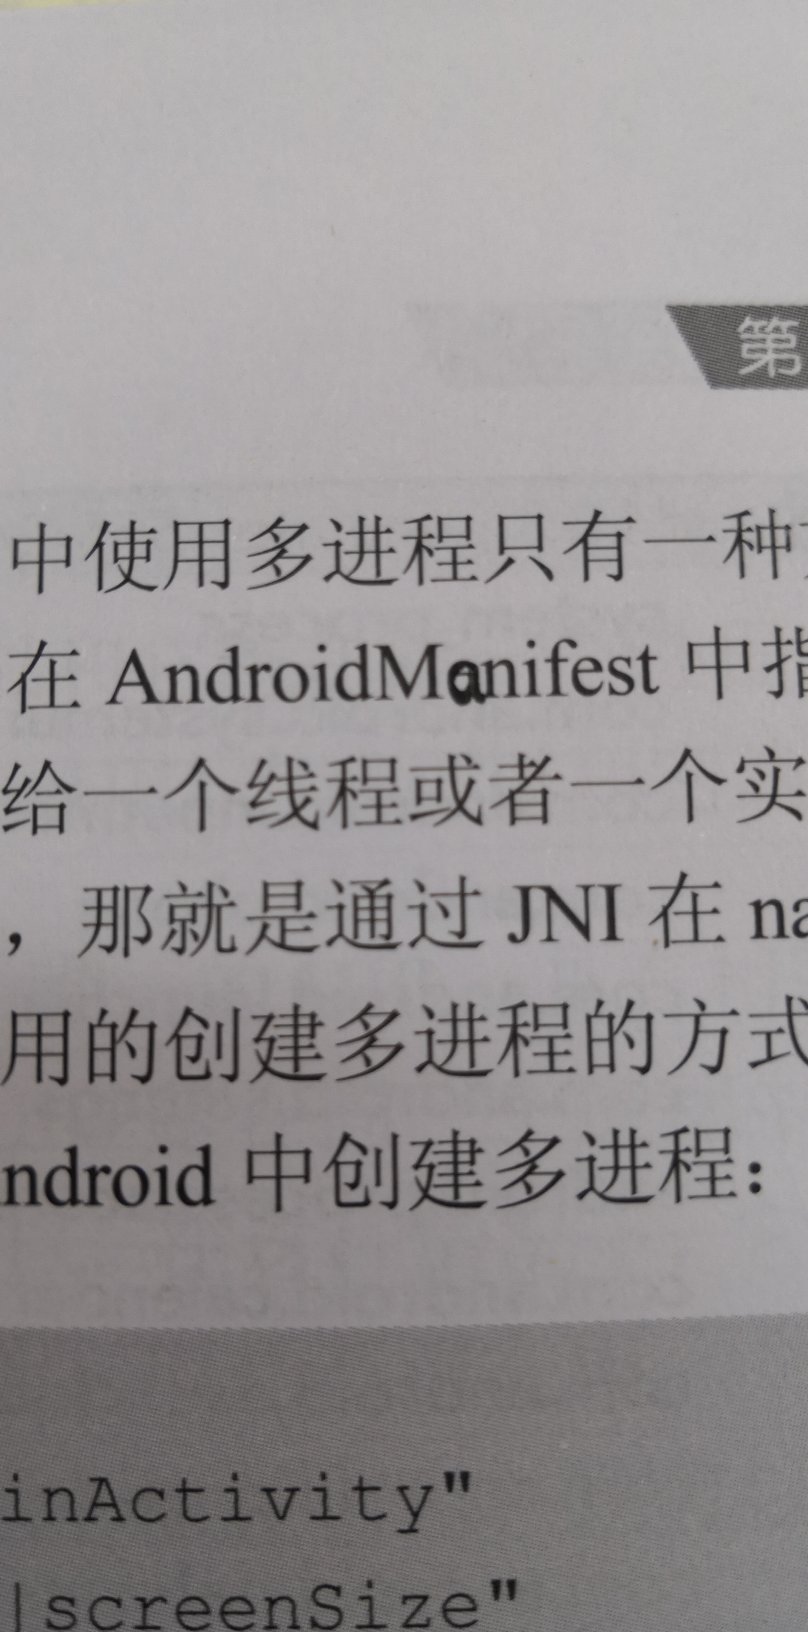 有错别字，androidmainfest写成了androidmeinfest，可能是盗版书